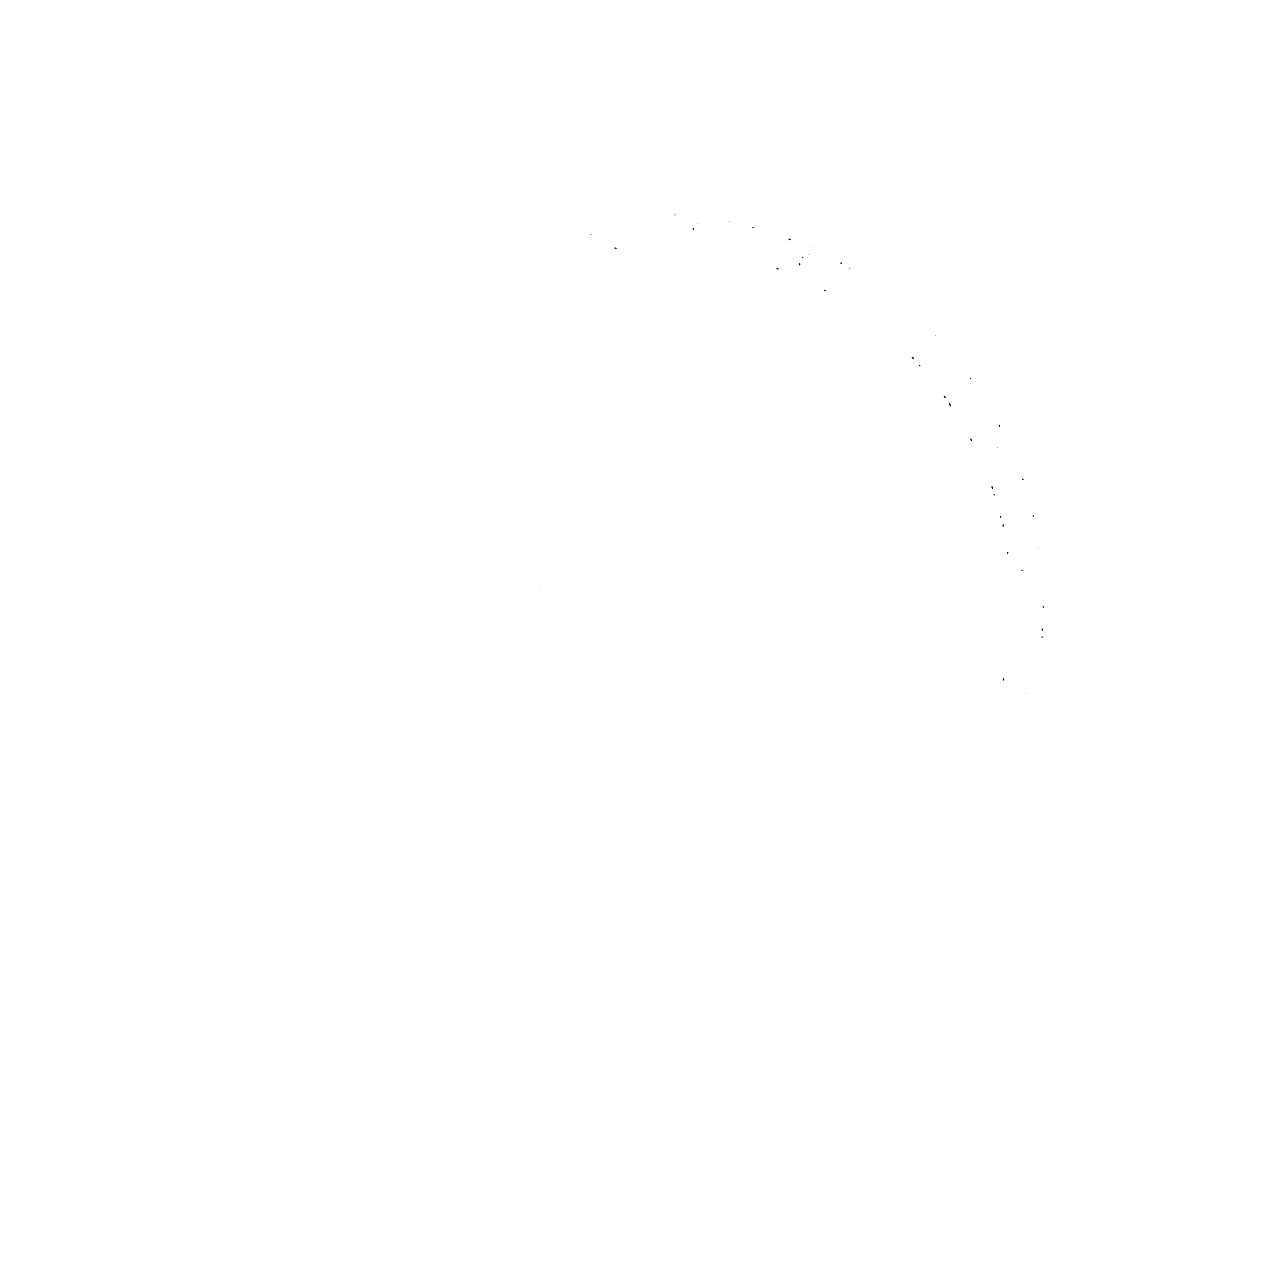 BLM Developpement, creation site internet, freelance